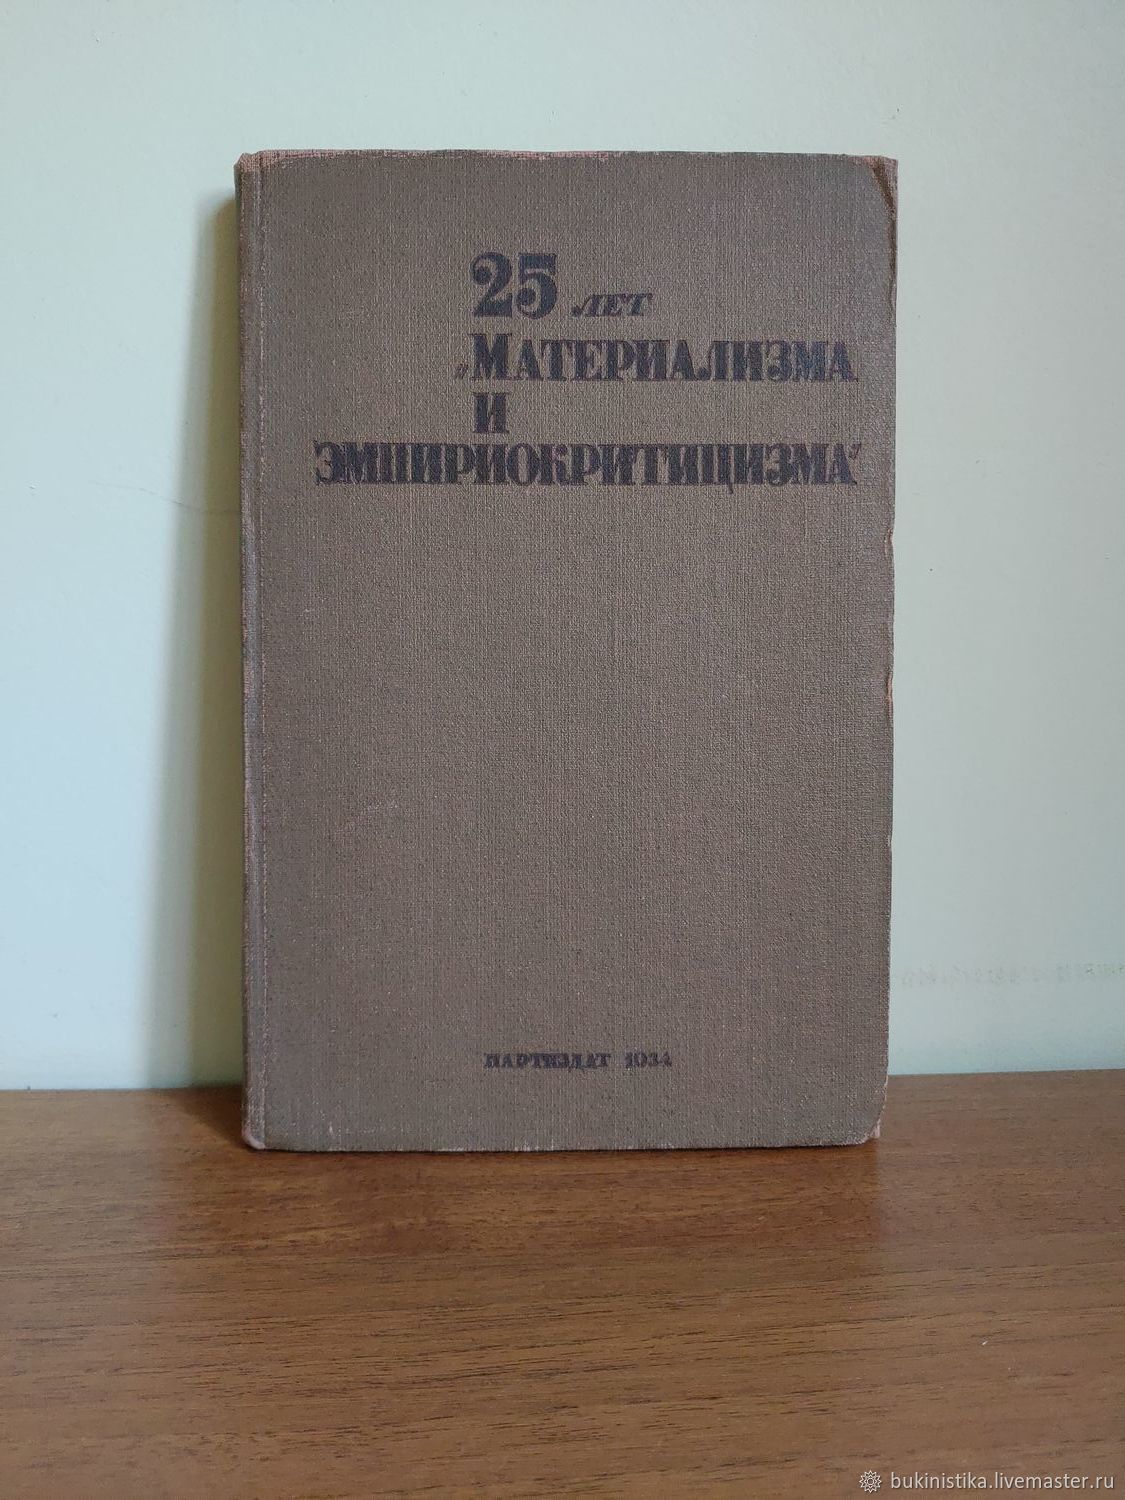 Книга 1934 года. Книги 1934 года. Материализм и эмпириокритицизм книга купить. Материализм и эмпириокритицизм 1931. Известная книга 1934 года.